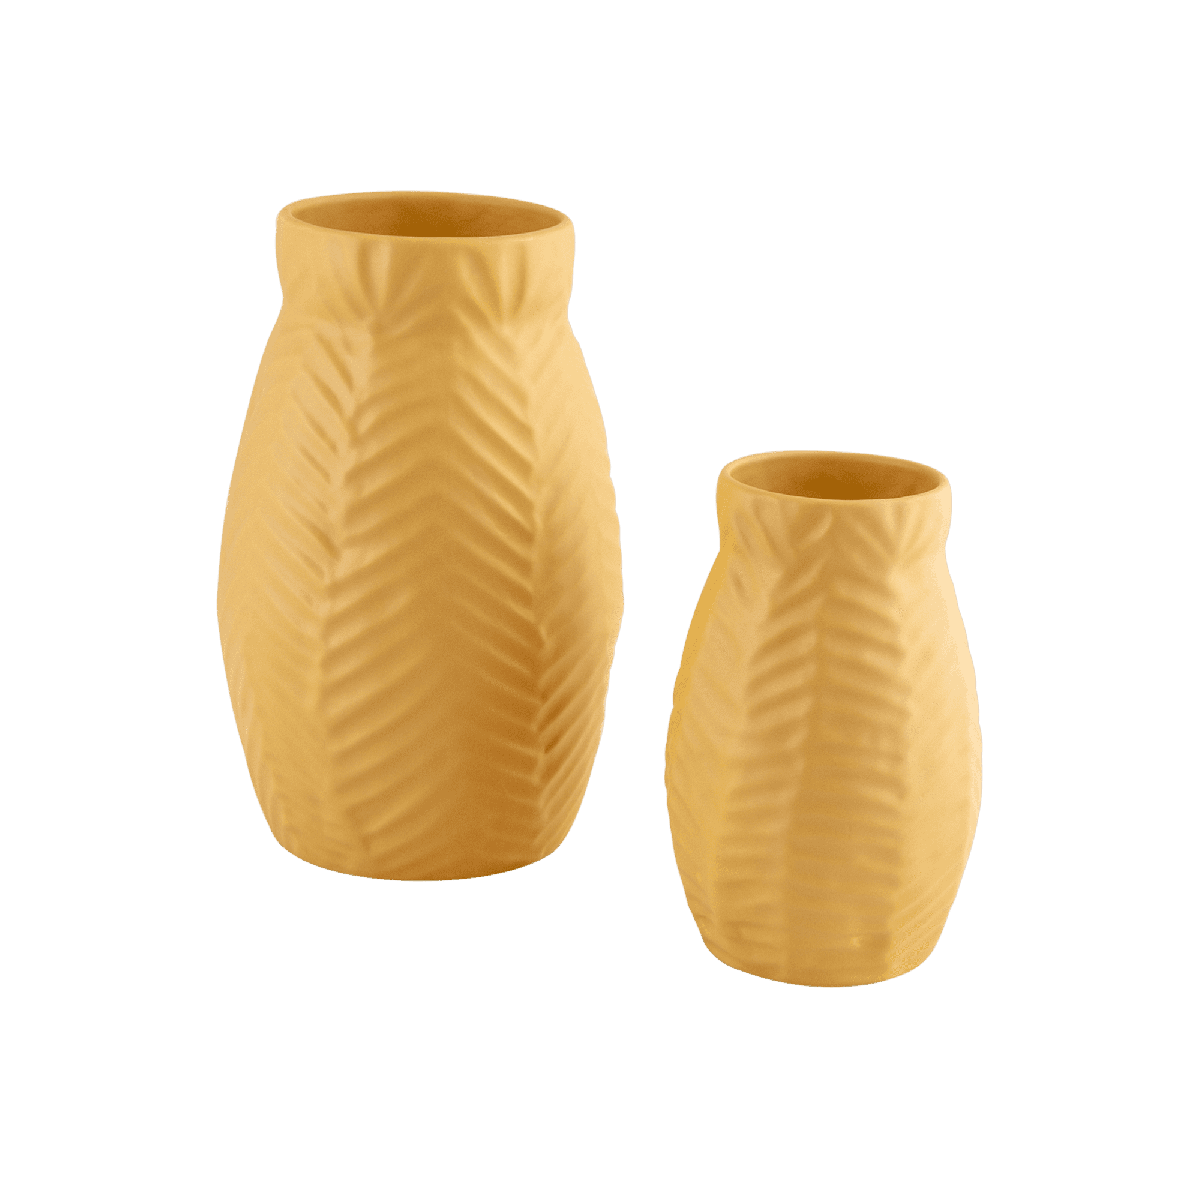 Herrinbone Vase